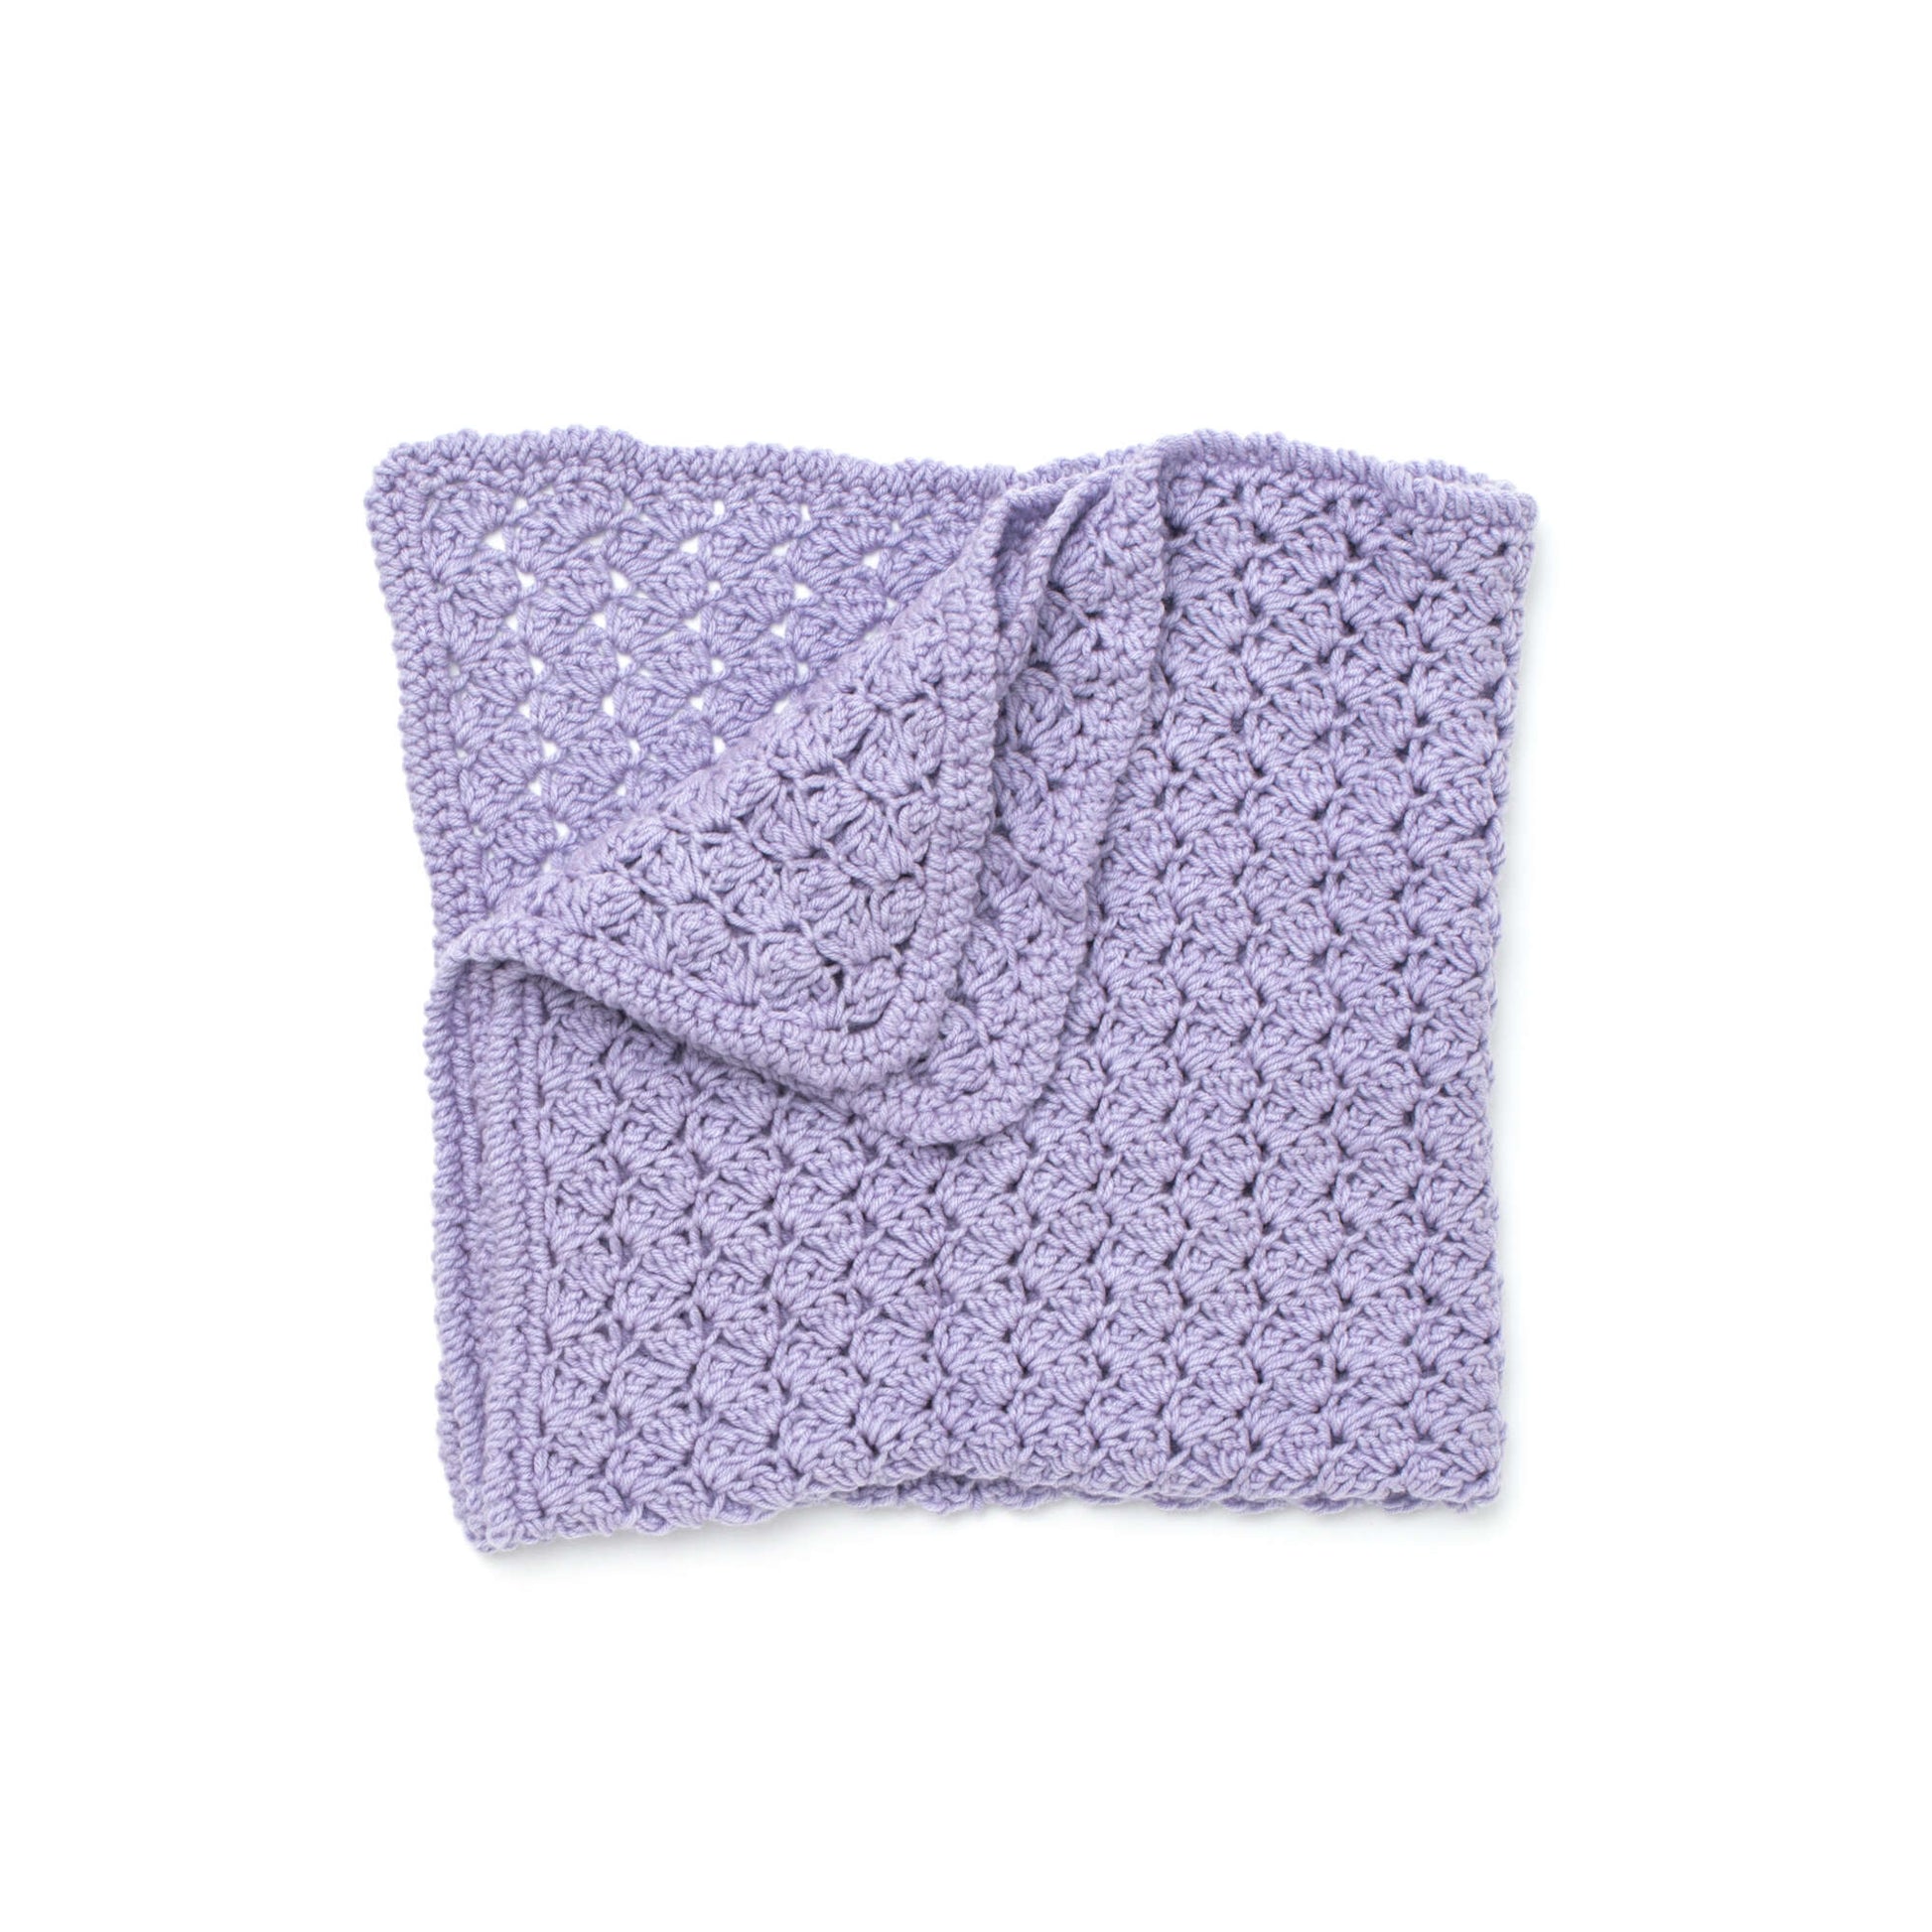 Free Caron Textured Crochet Baby Blanket Pattern